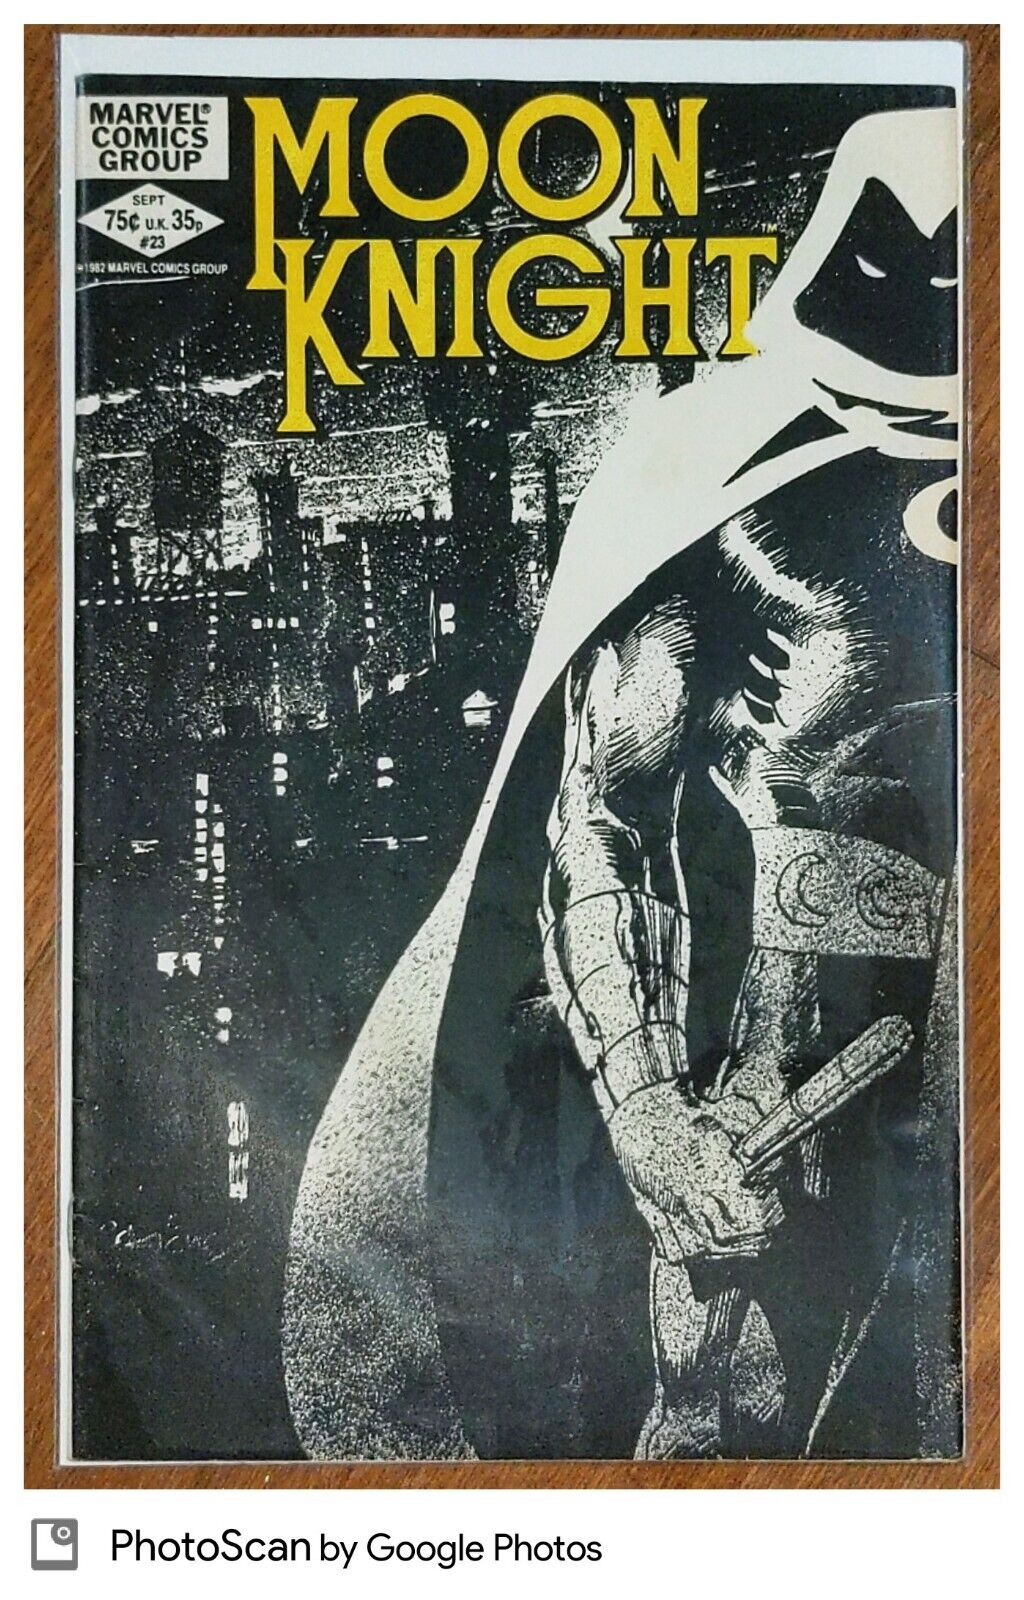 Moon Knight #23, Marvel Comics 1982, iconic Bill Sienkiewicz cover